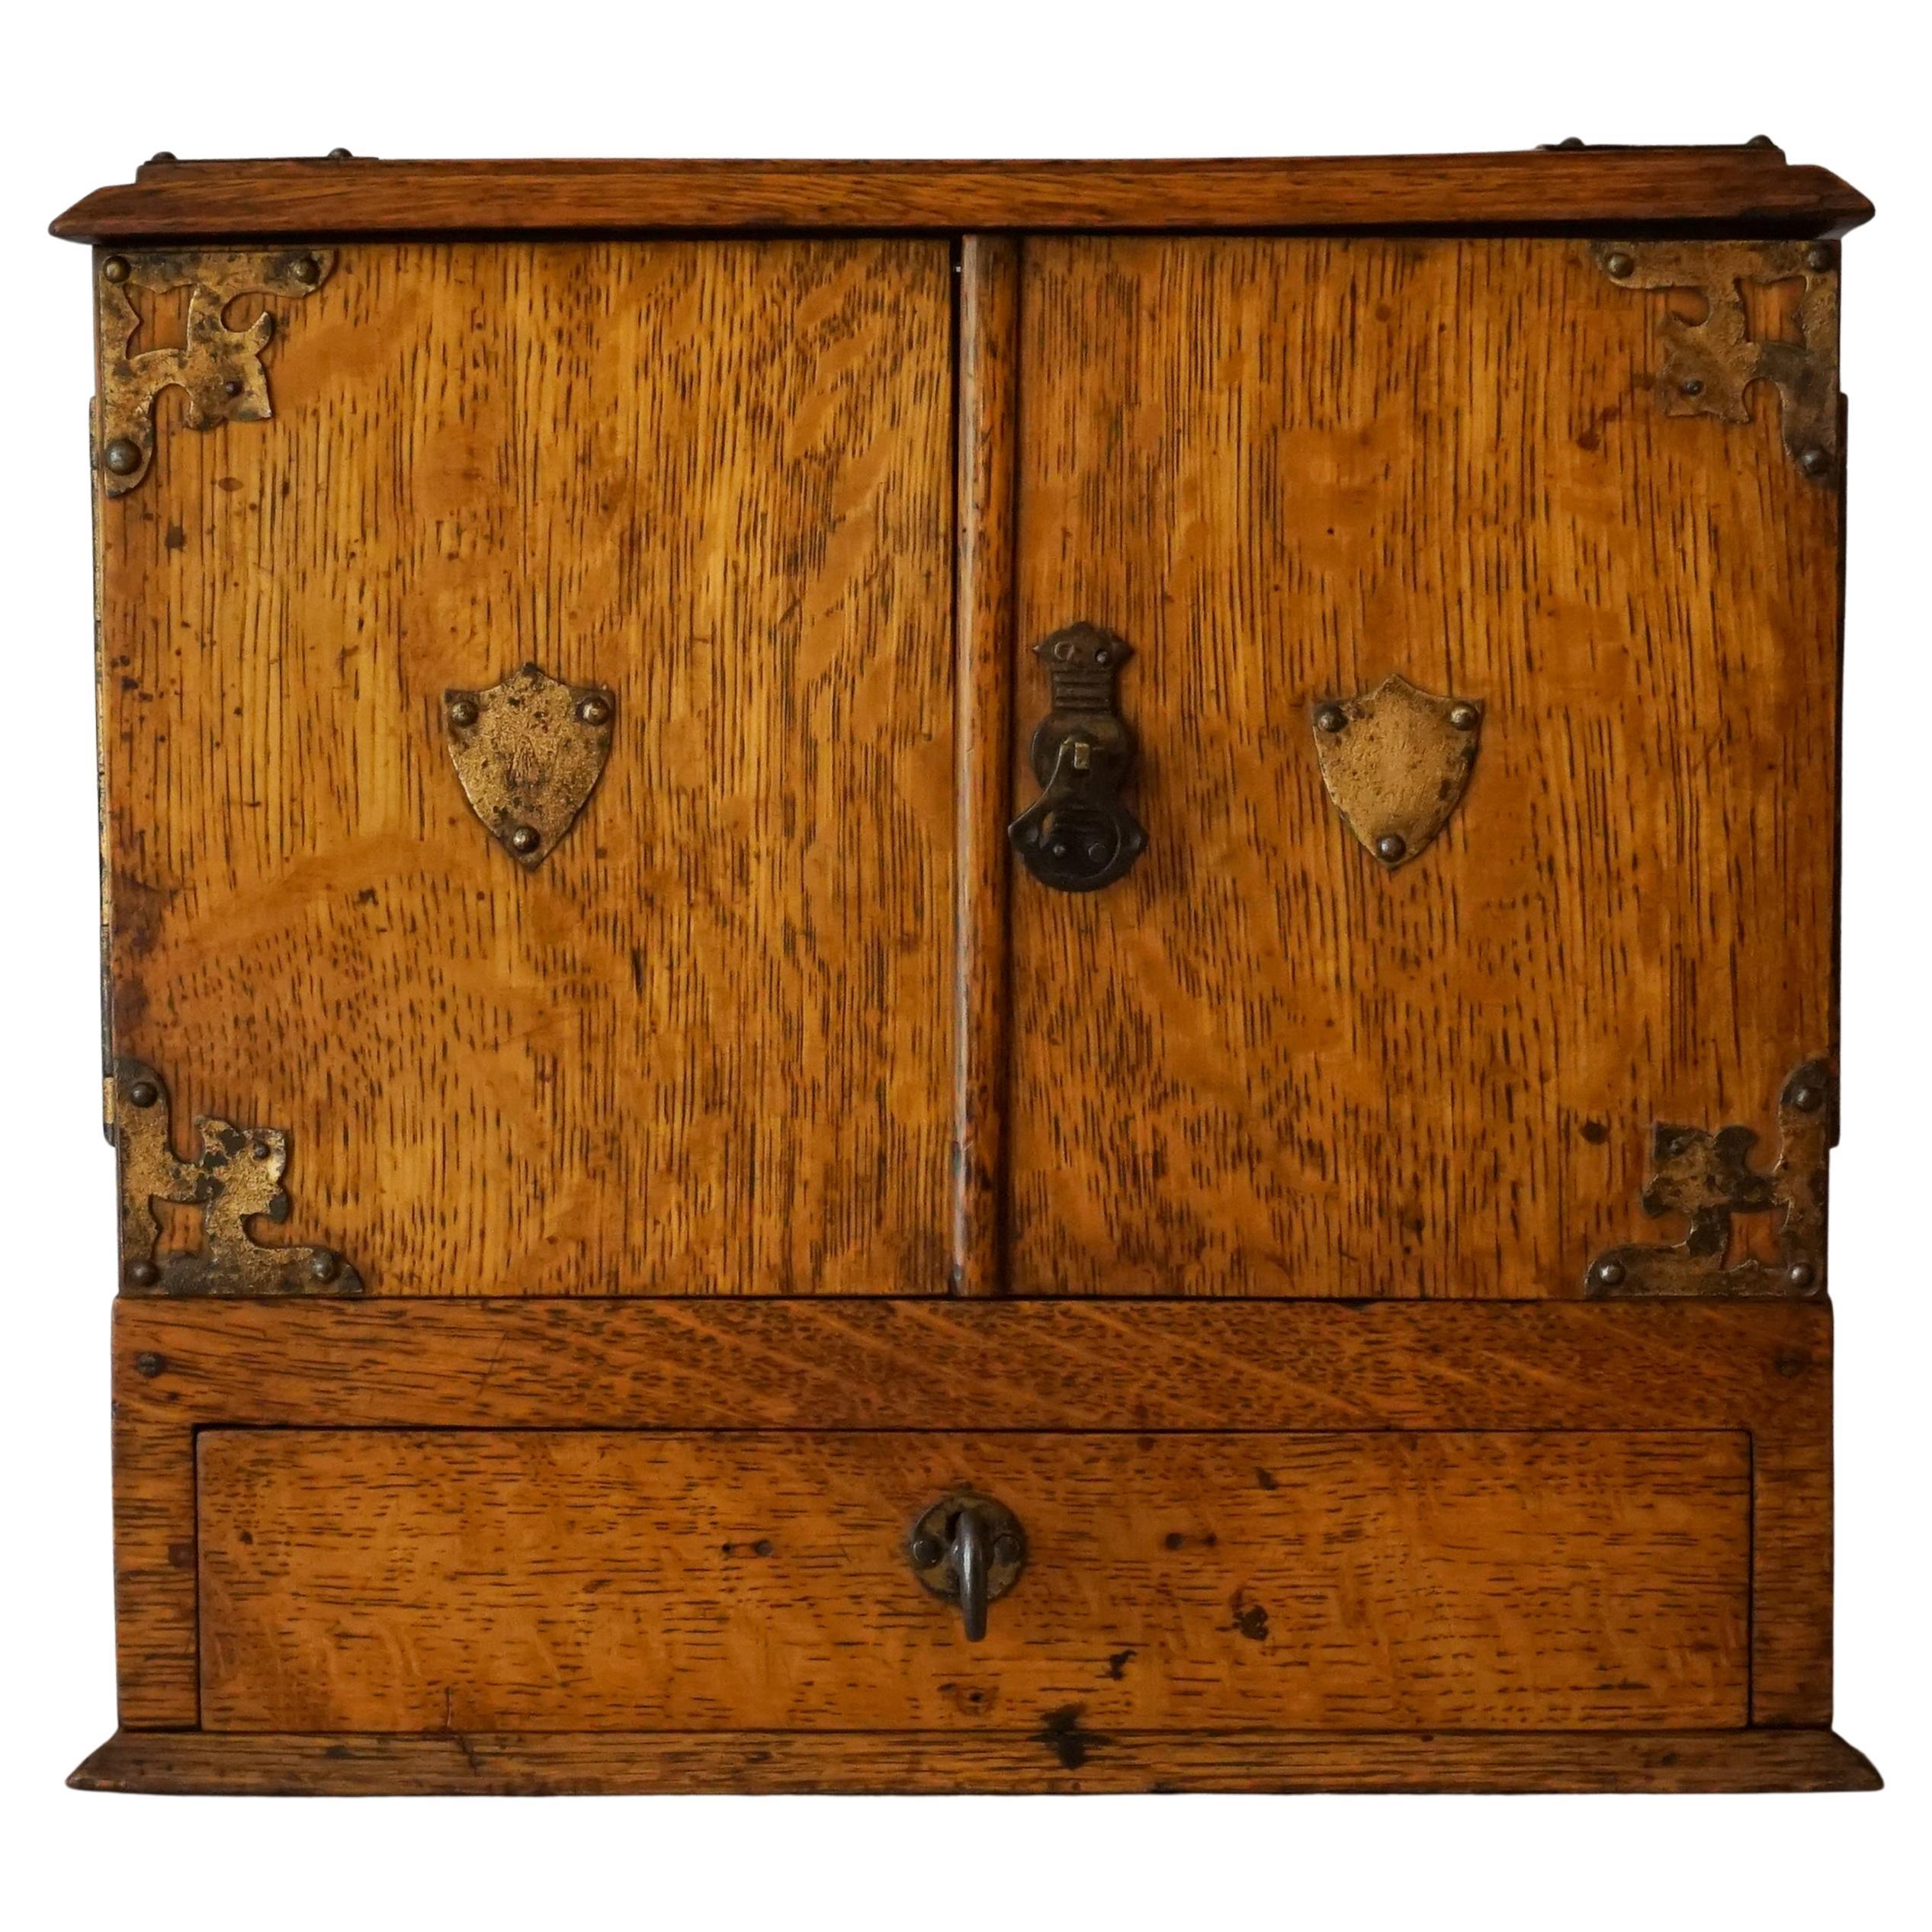 19th Century English Oak Cigar Humidor Box Cabinet with Cedar Interior Drawers